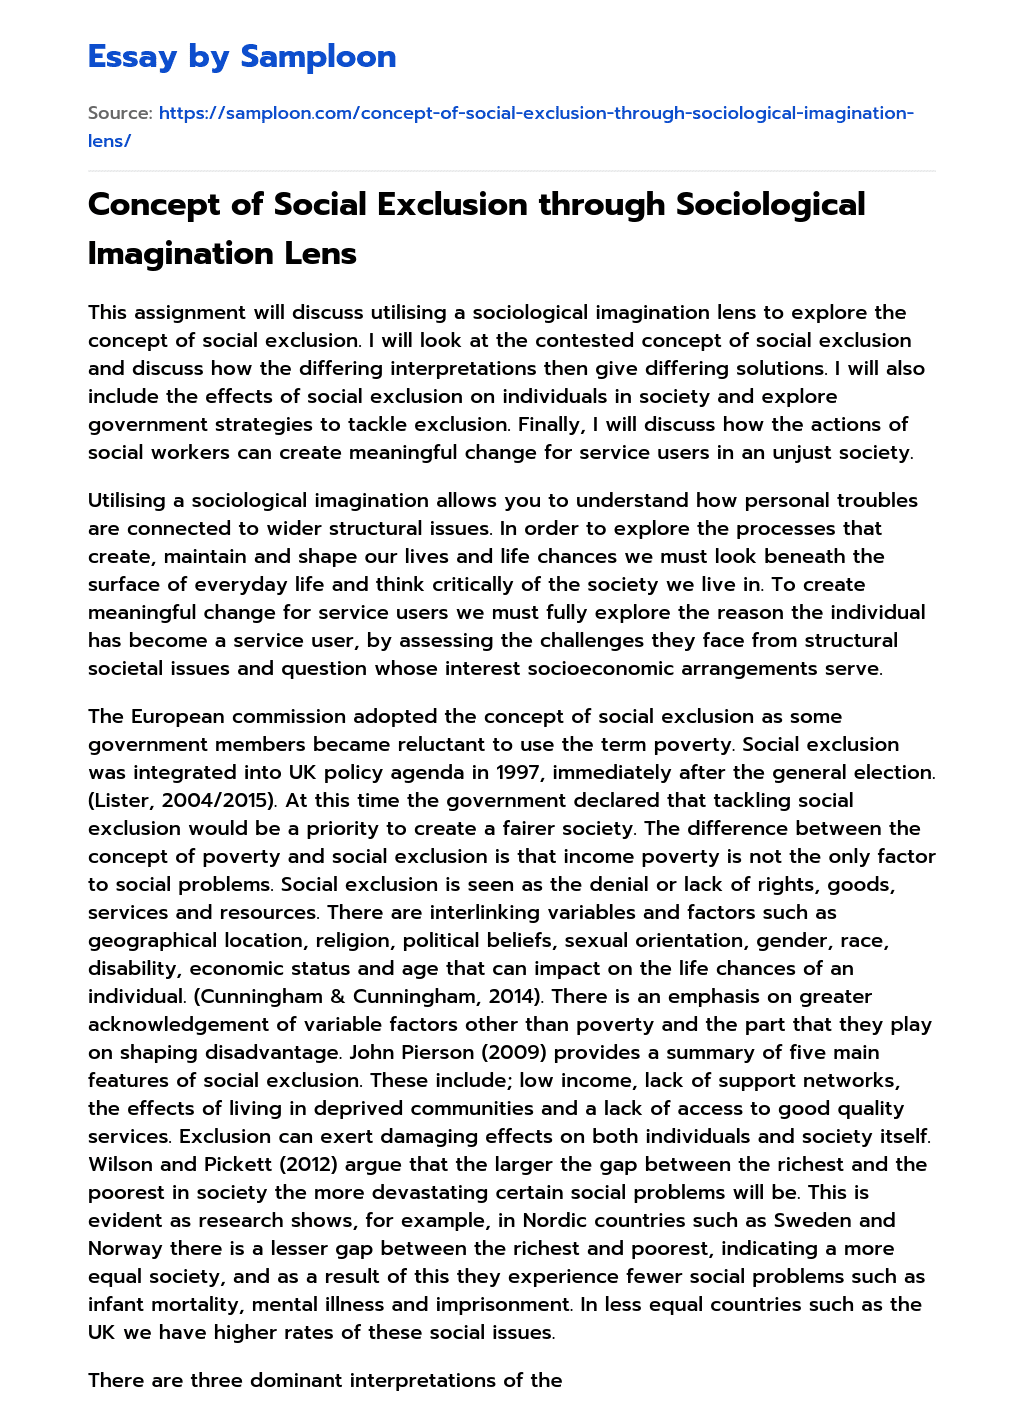 Concept of Social Exclusion through Sociological Imagination Lens essay